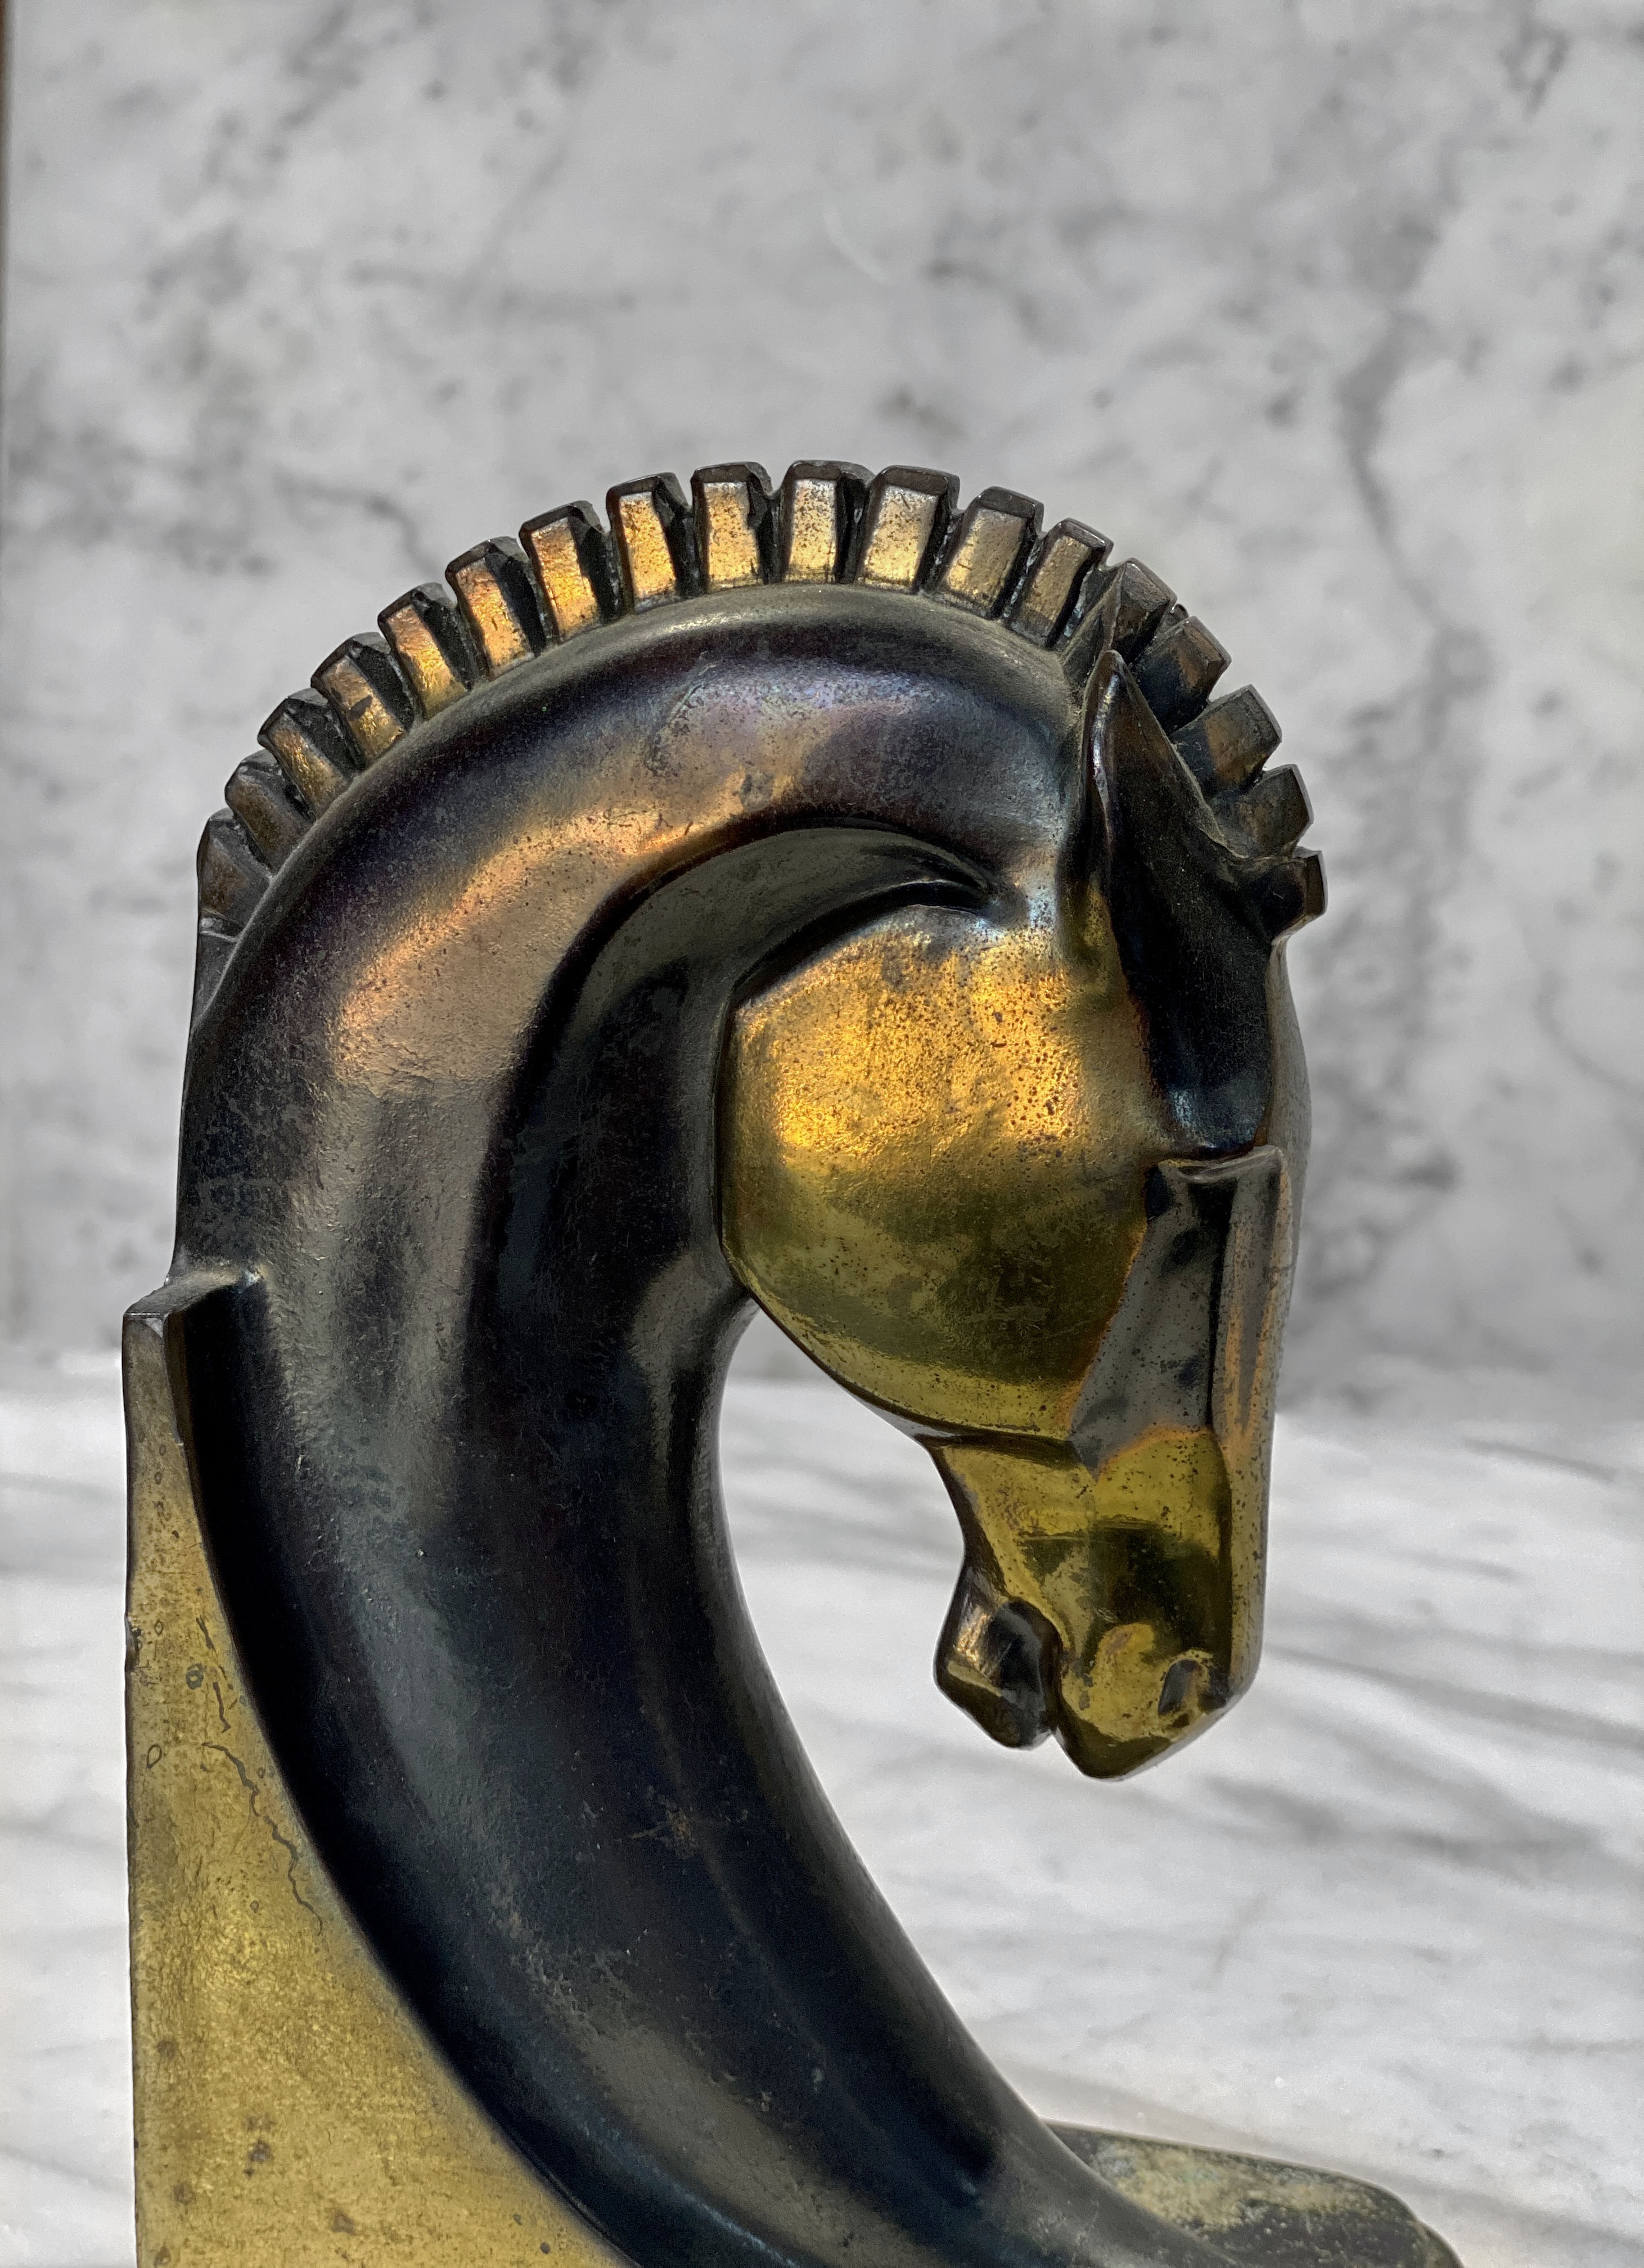 antique saddle horse bookends